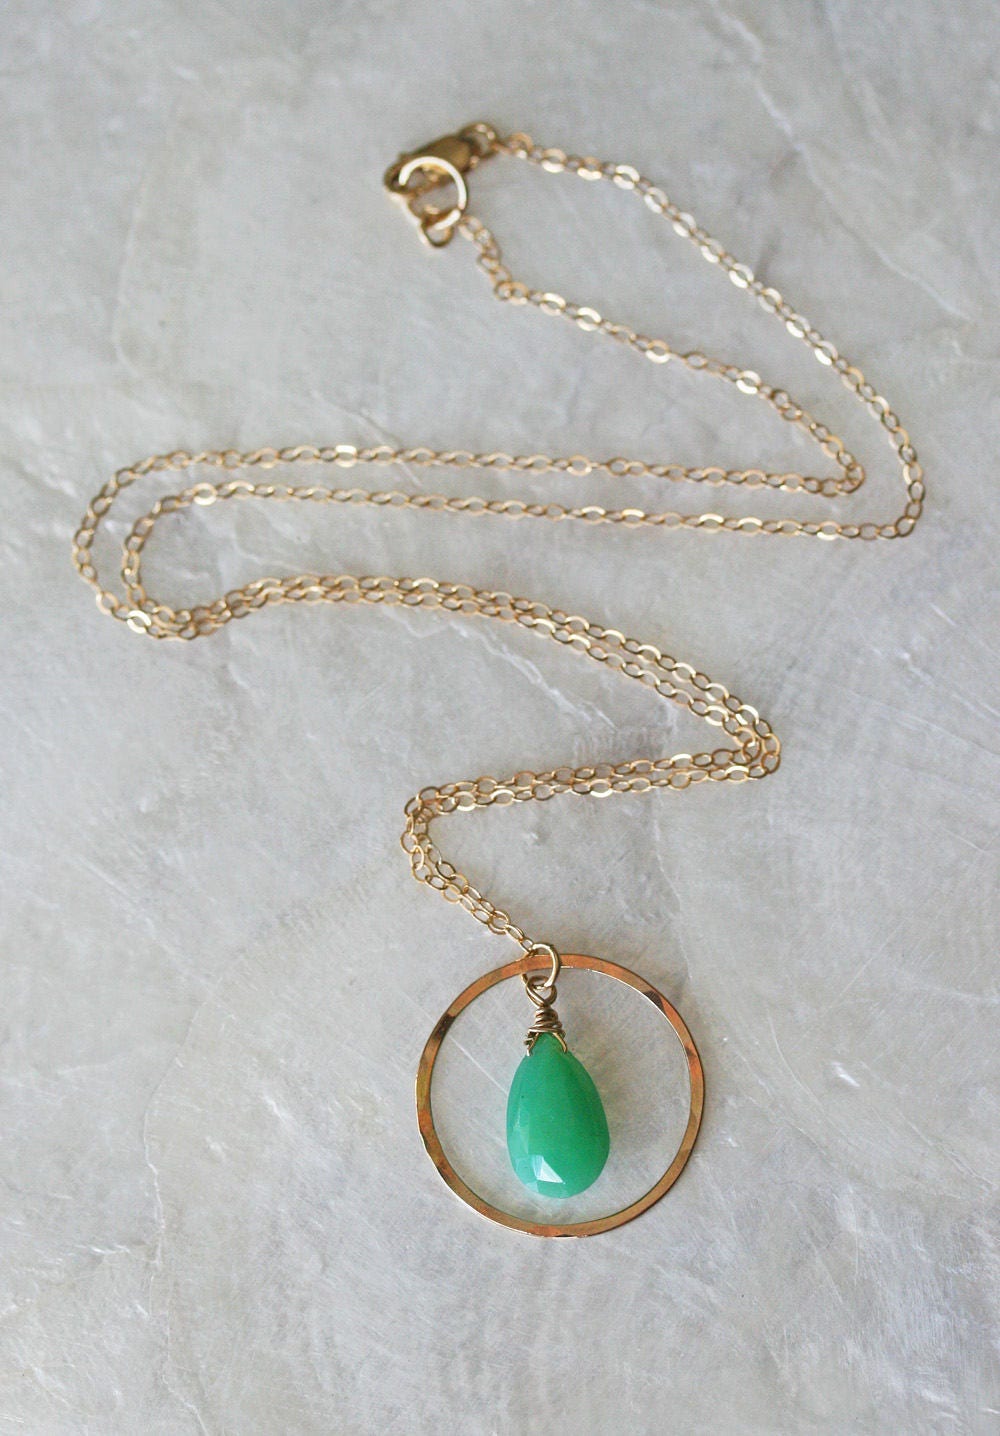 Chrysoprase Briolette Necklace Hammered Pendant Green Stone | Etsy